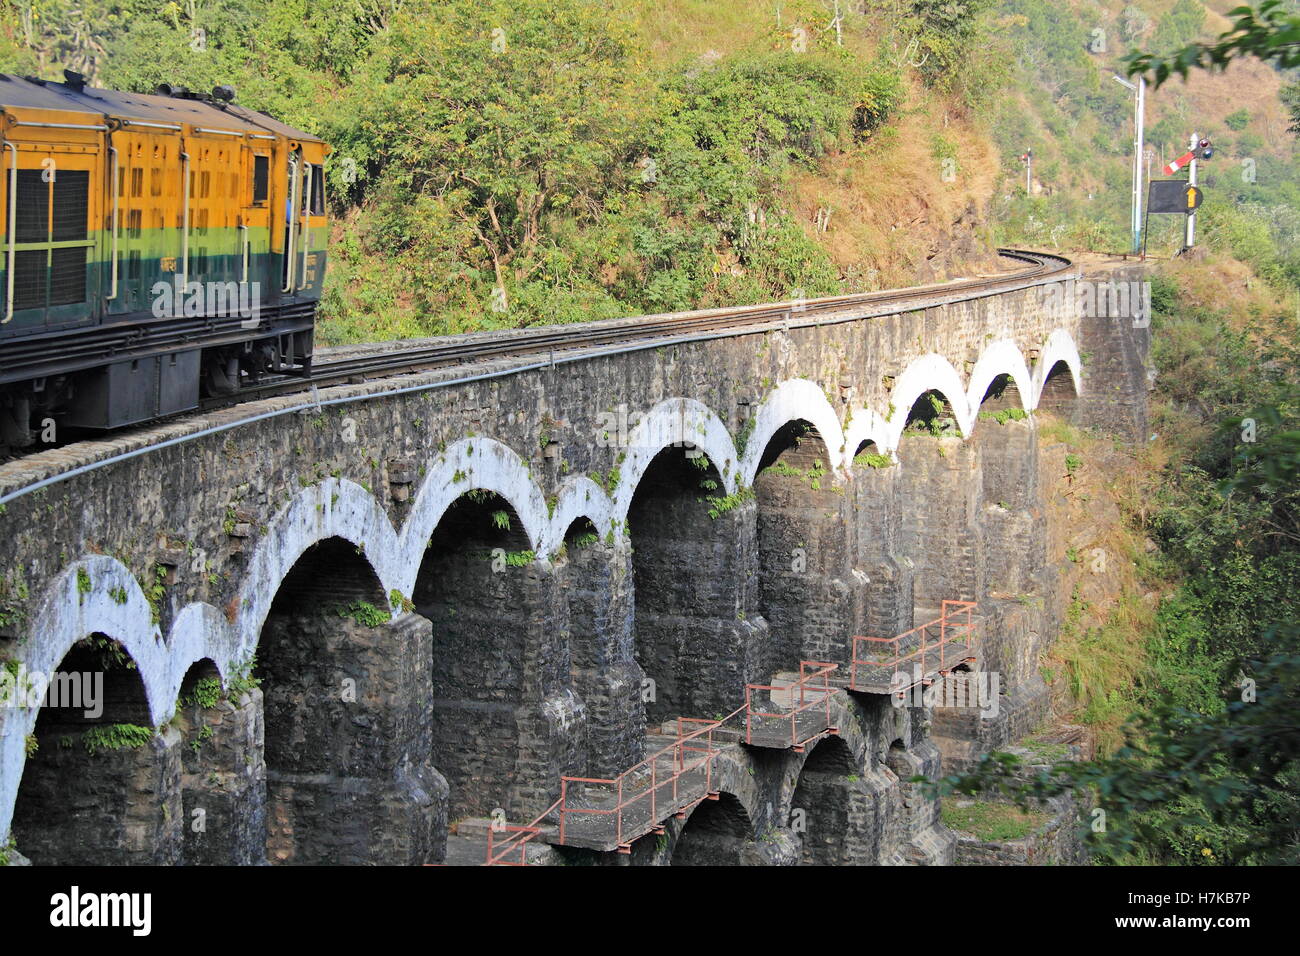 Arch Gallery Bridge 541, near Kanoh, Kalka-Shimla Railway, Himachal Pradesh, India, Indian subcontinent, South Asia Stock Photo